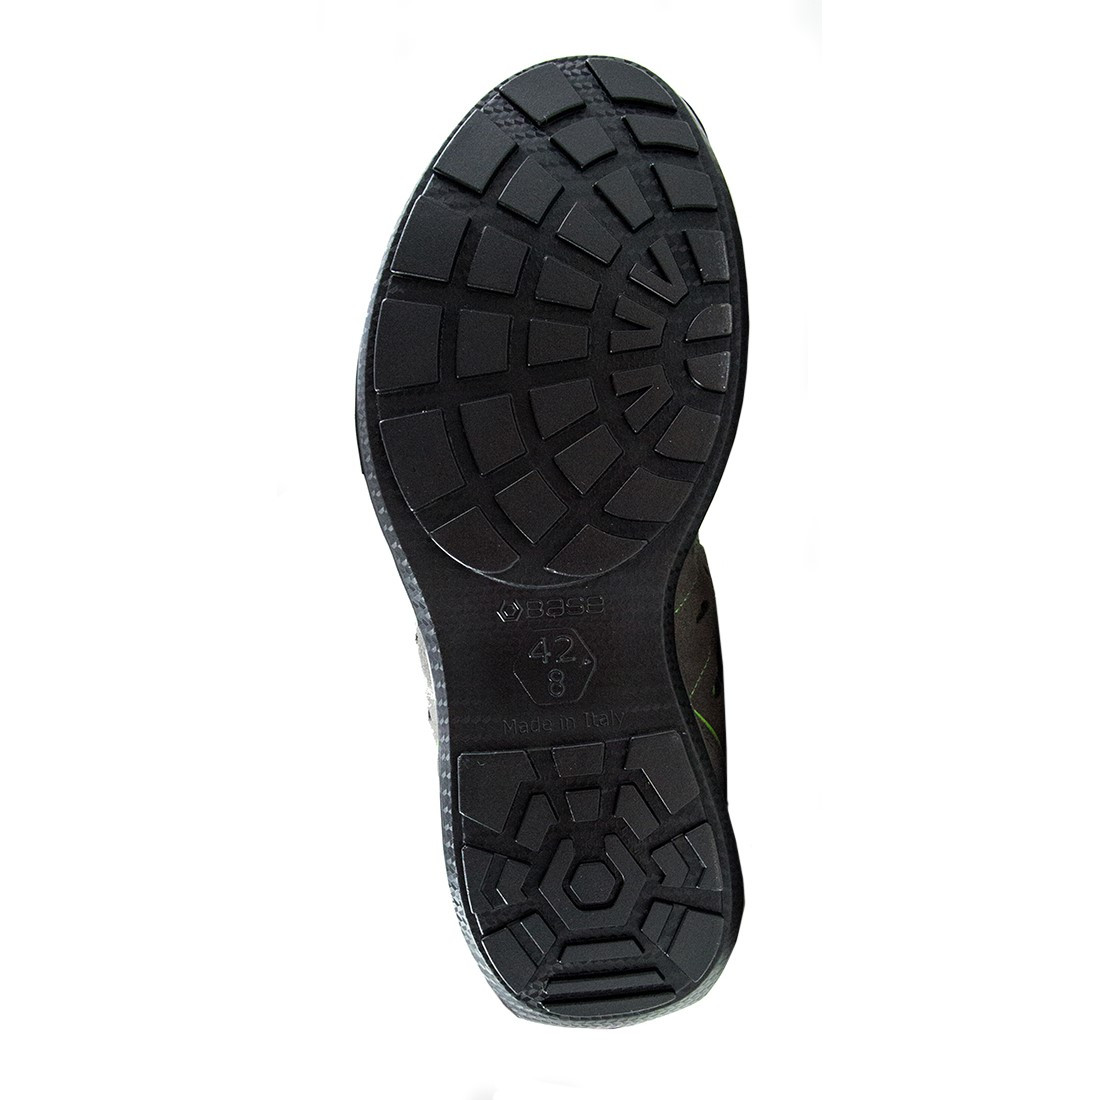 Pantofi Darts S1P ESD SRC - Incaltaminte de protectie | Bocanci, Pantofi, Sandale, Cizme